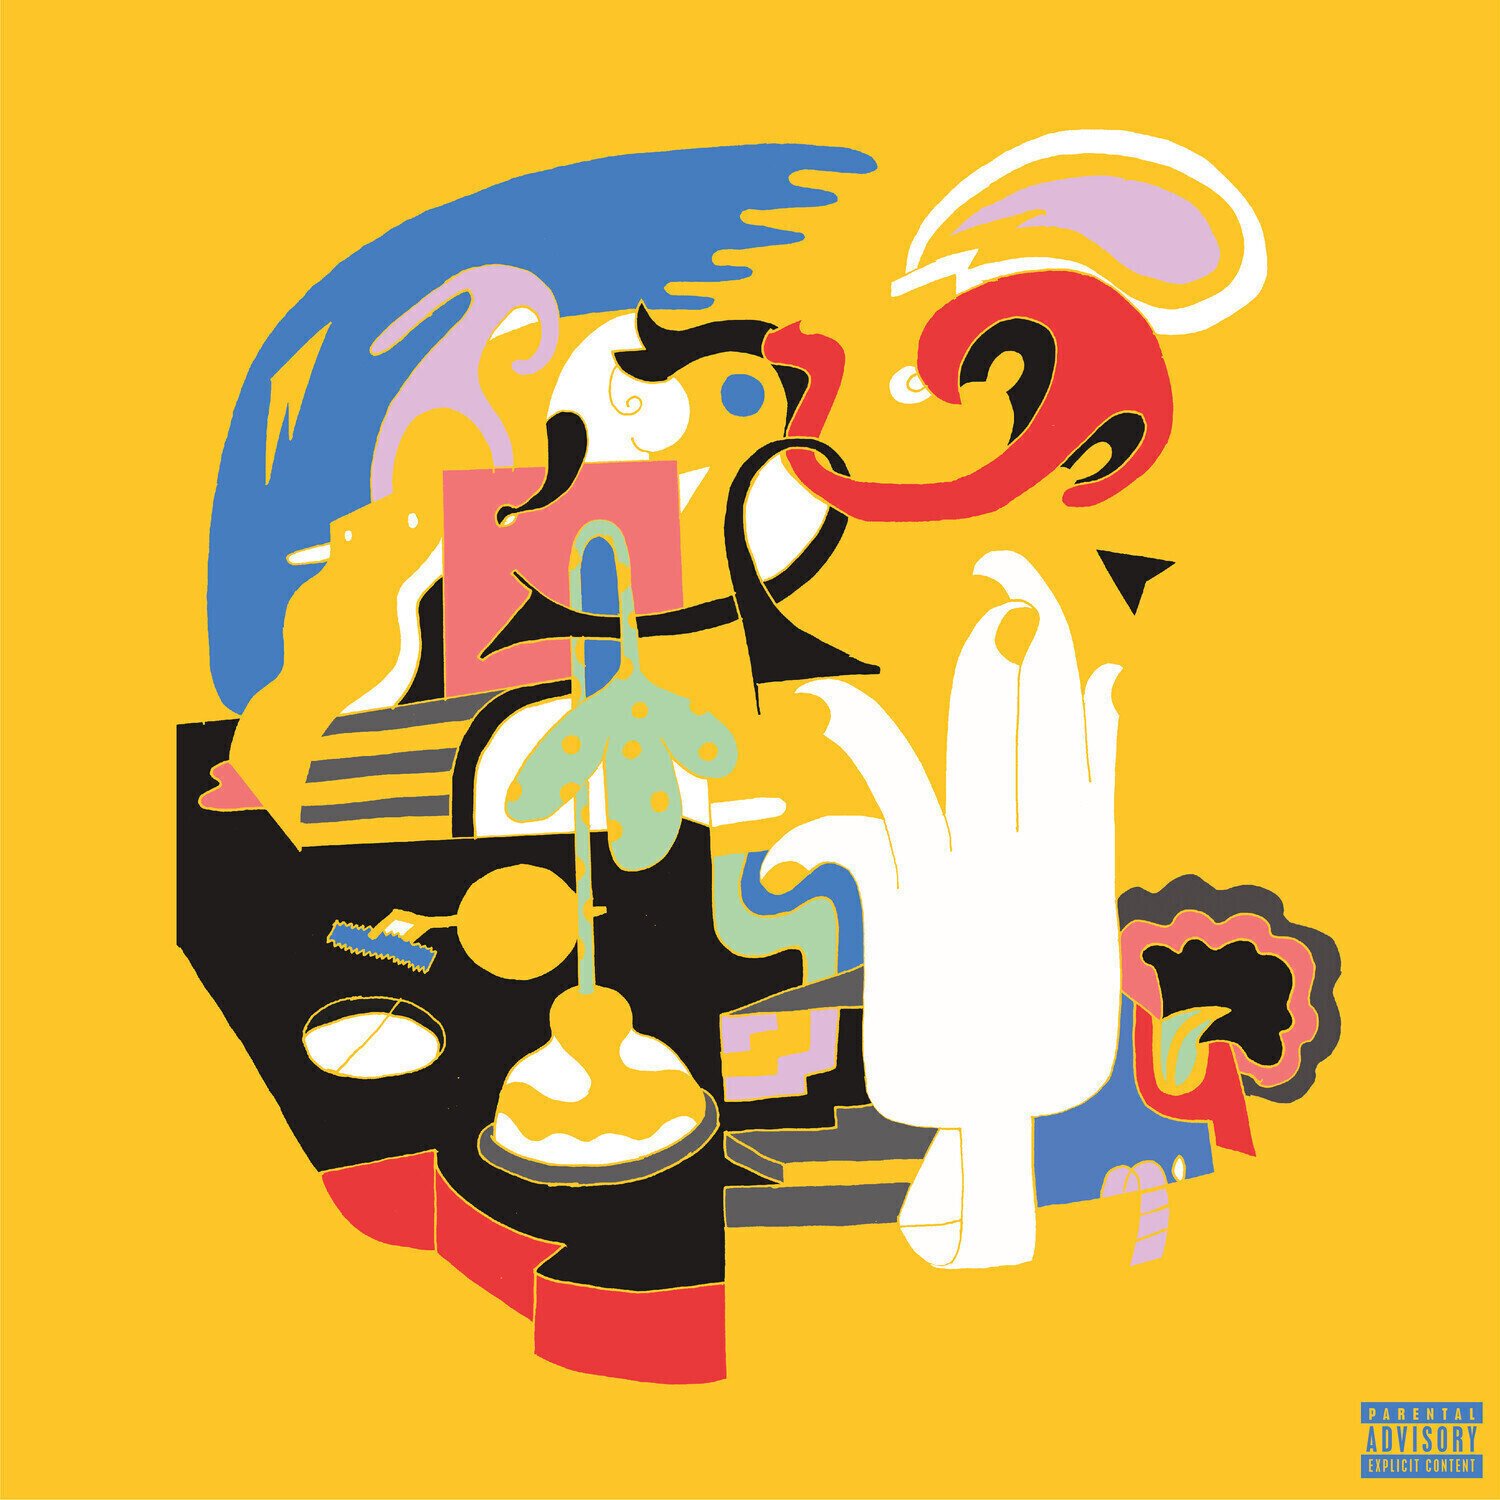 Disque vinyle Mac Miller - Faces (Yellow Coloured) (Reissue) (3 LP)